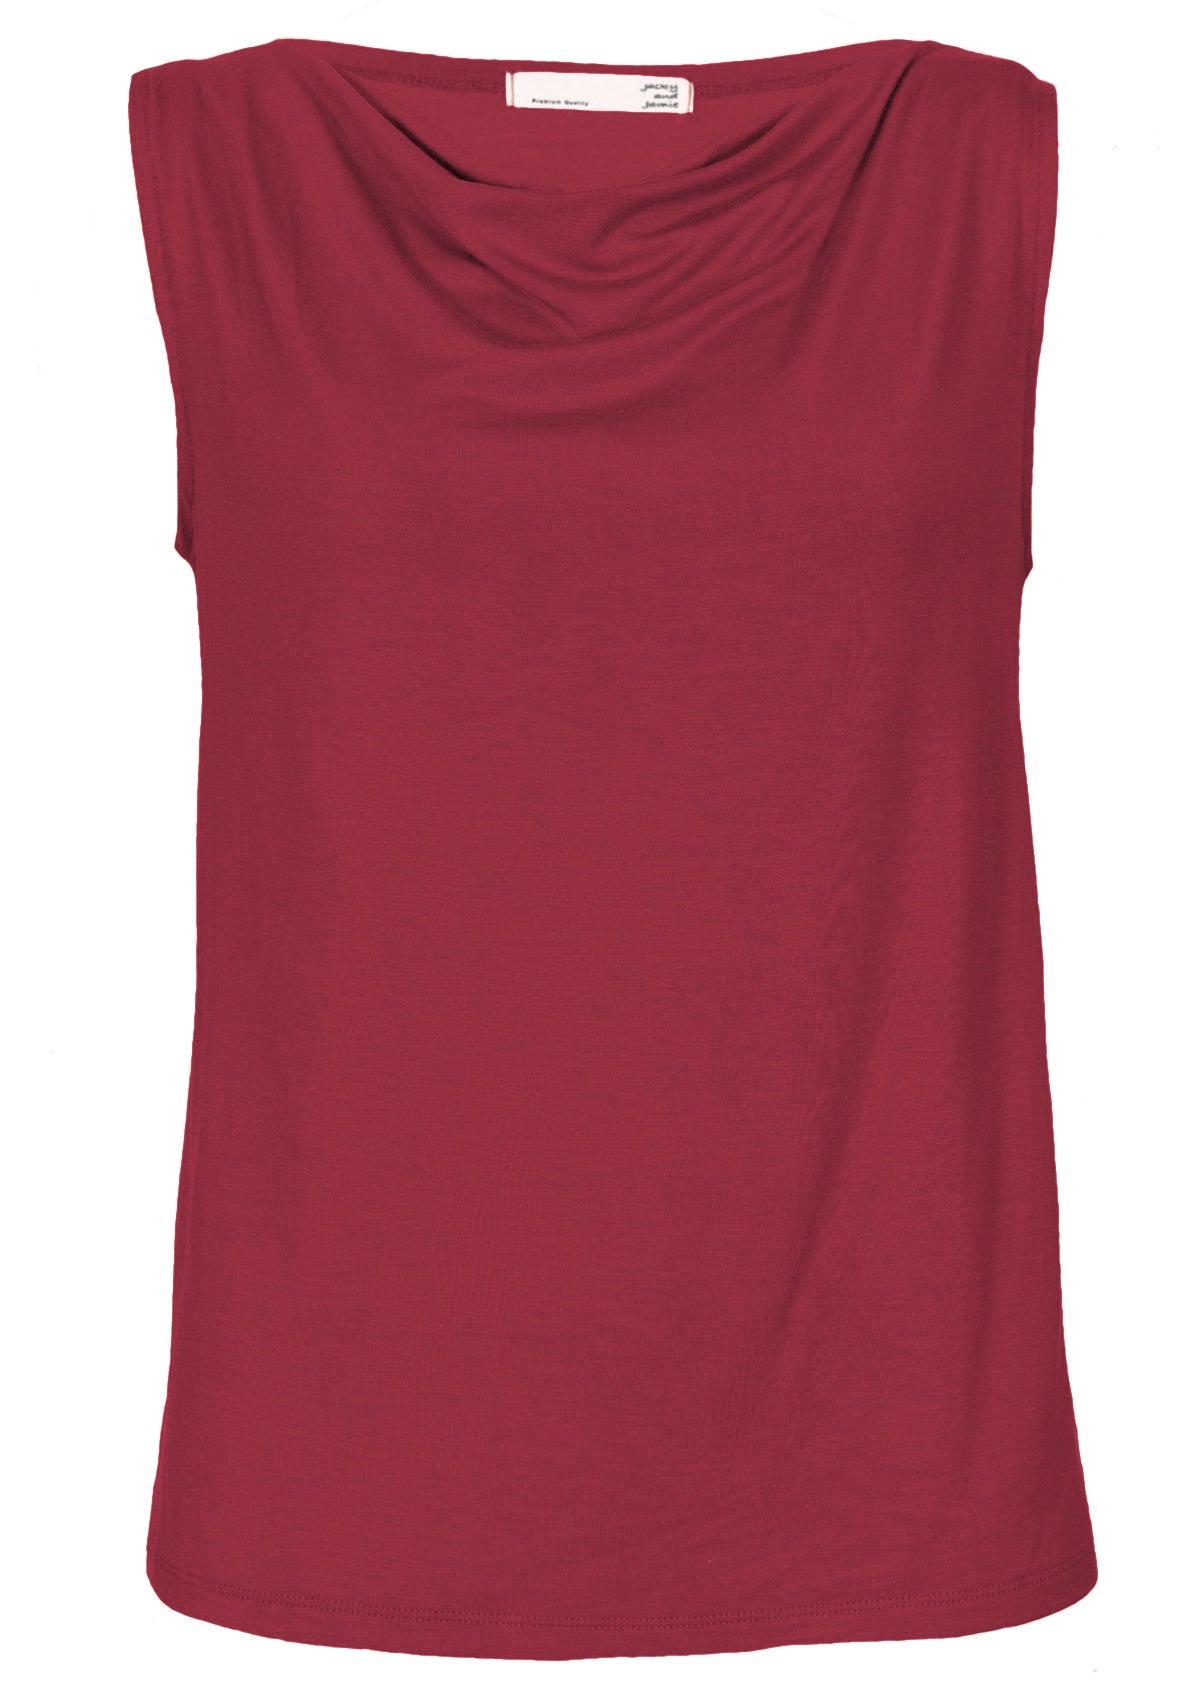 women's maroon coloured basic rayon top